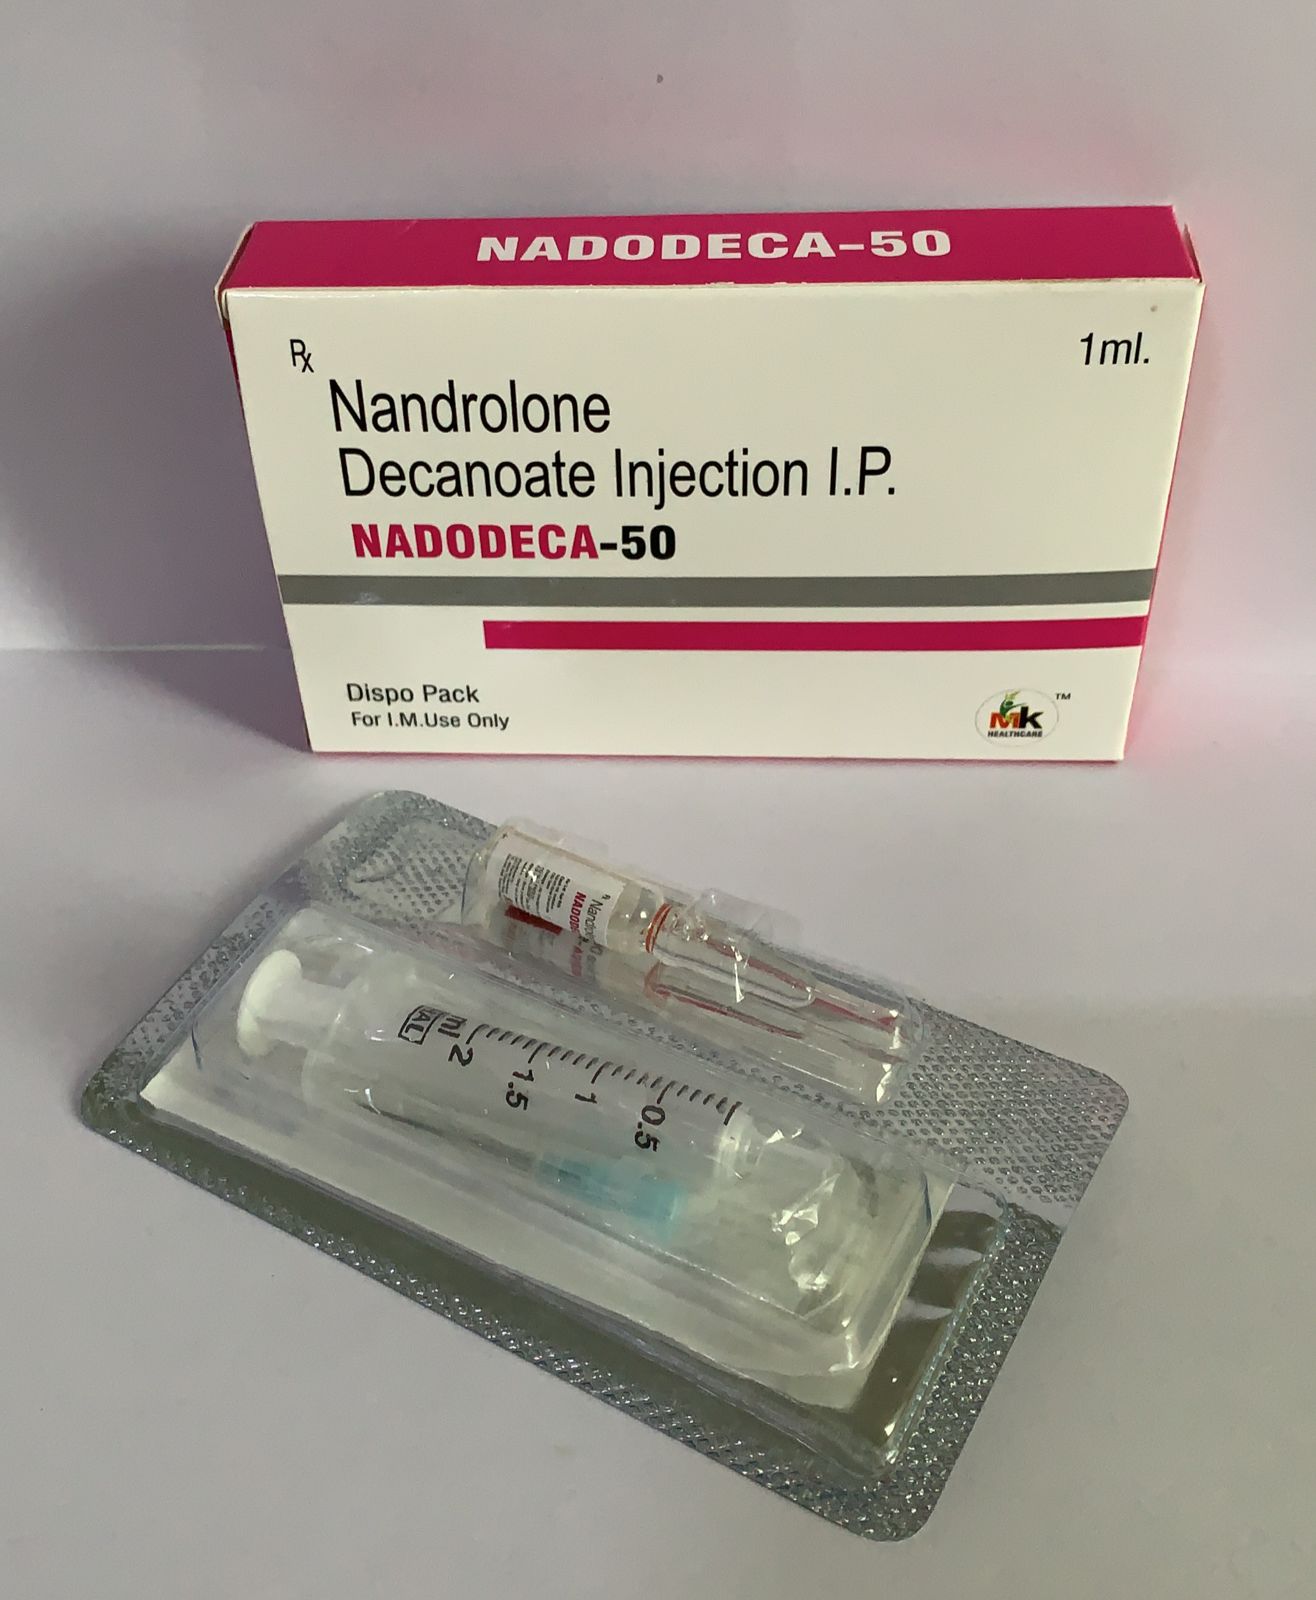 NADODECA-50